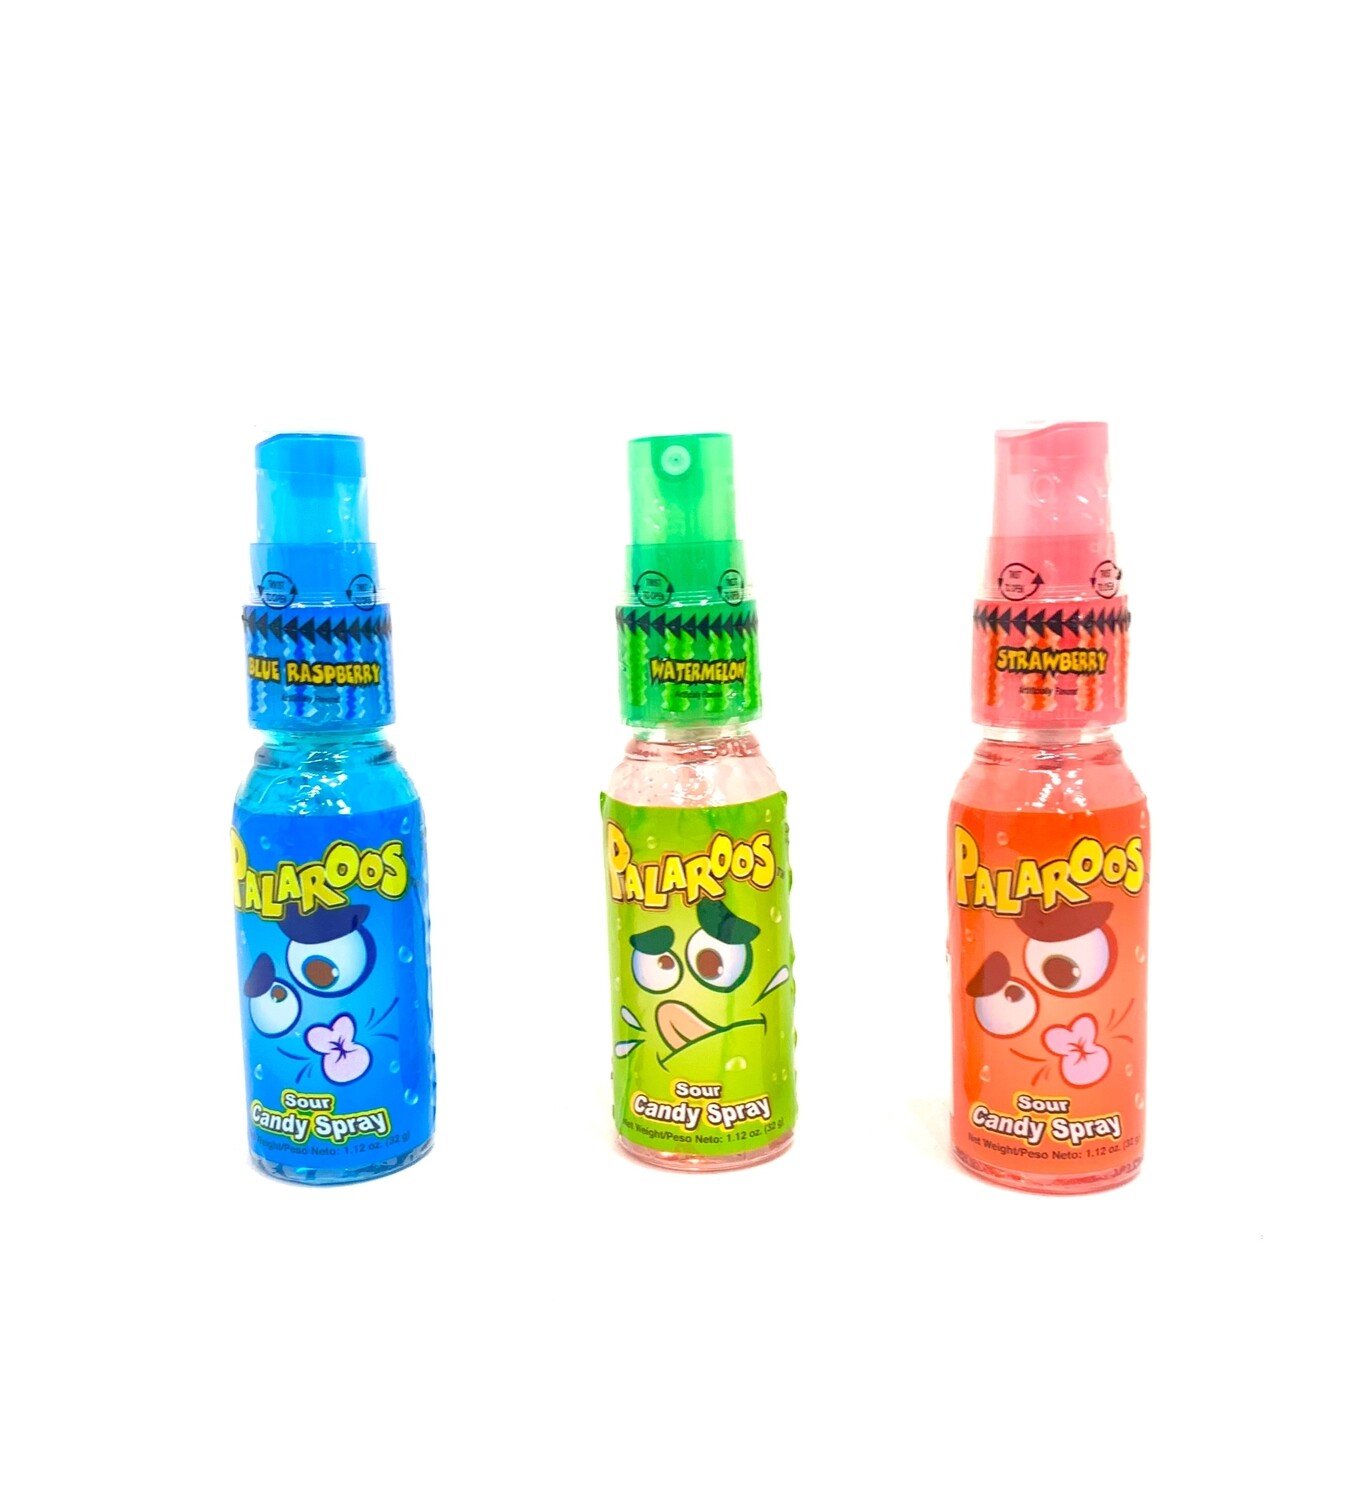 Palaroos Candy Spray 1ct